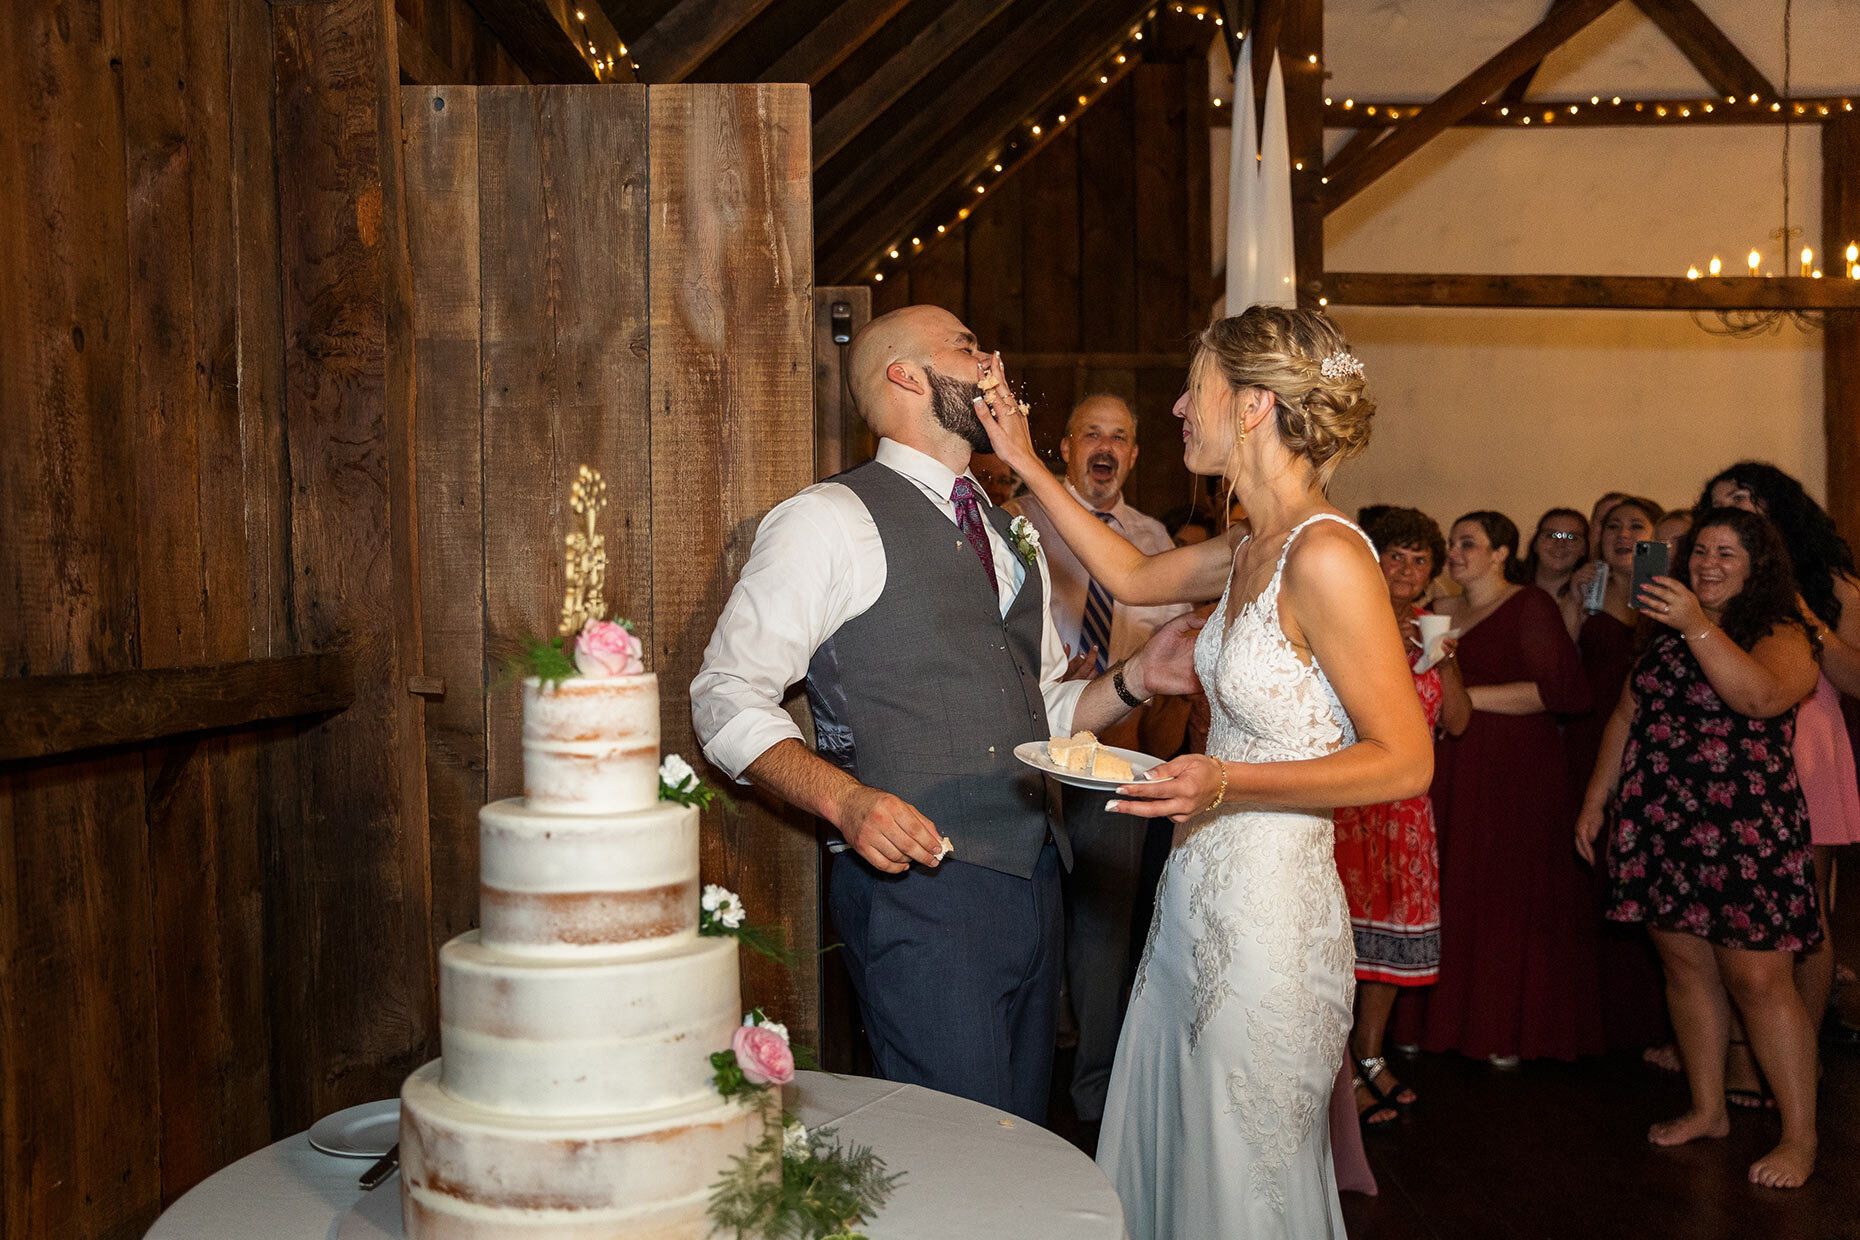 Bride smashes cake in groom's face